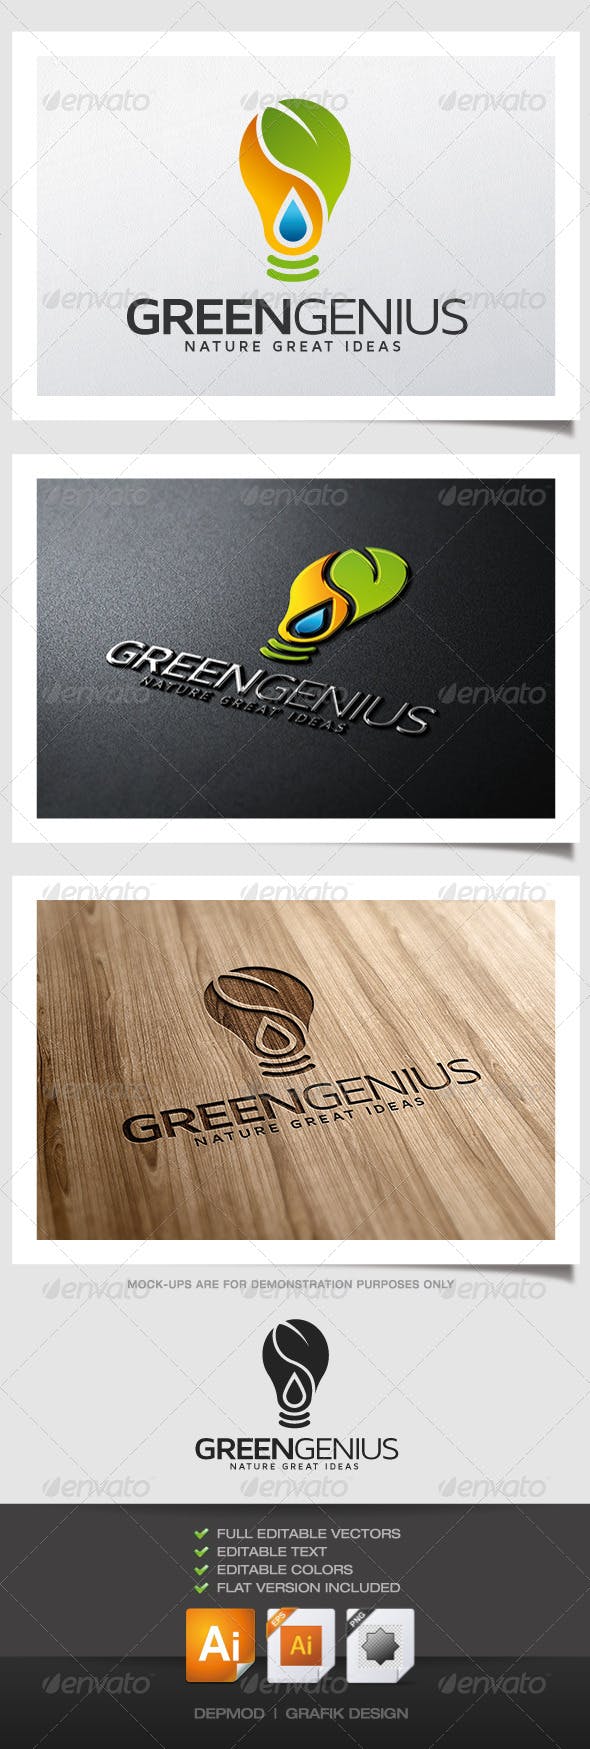 Green Genius Logo - Green Genius Logo by Opaq | GraphicRiver